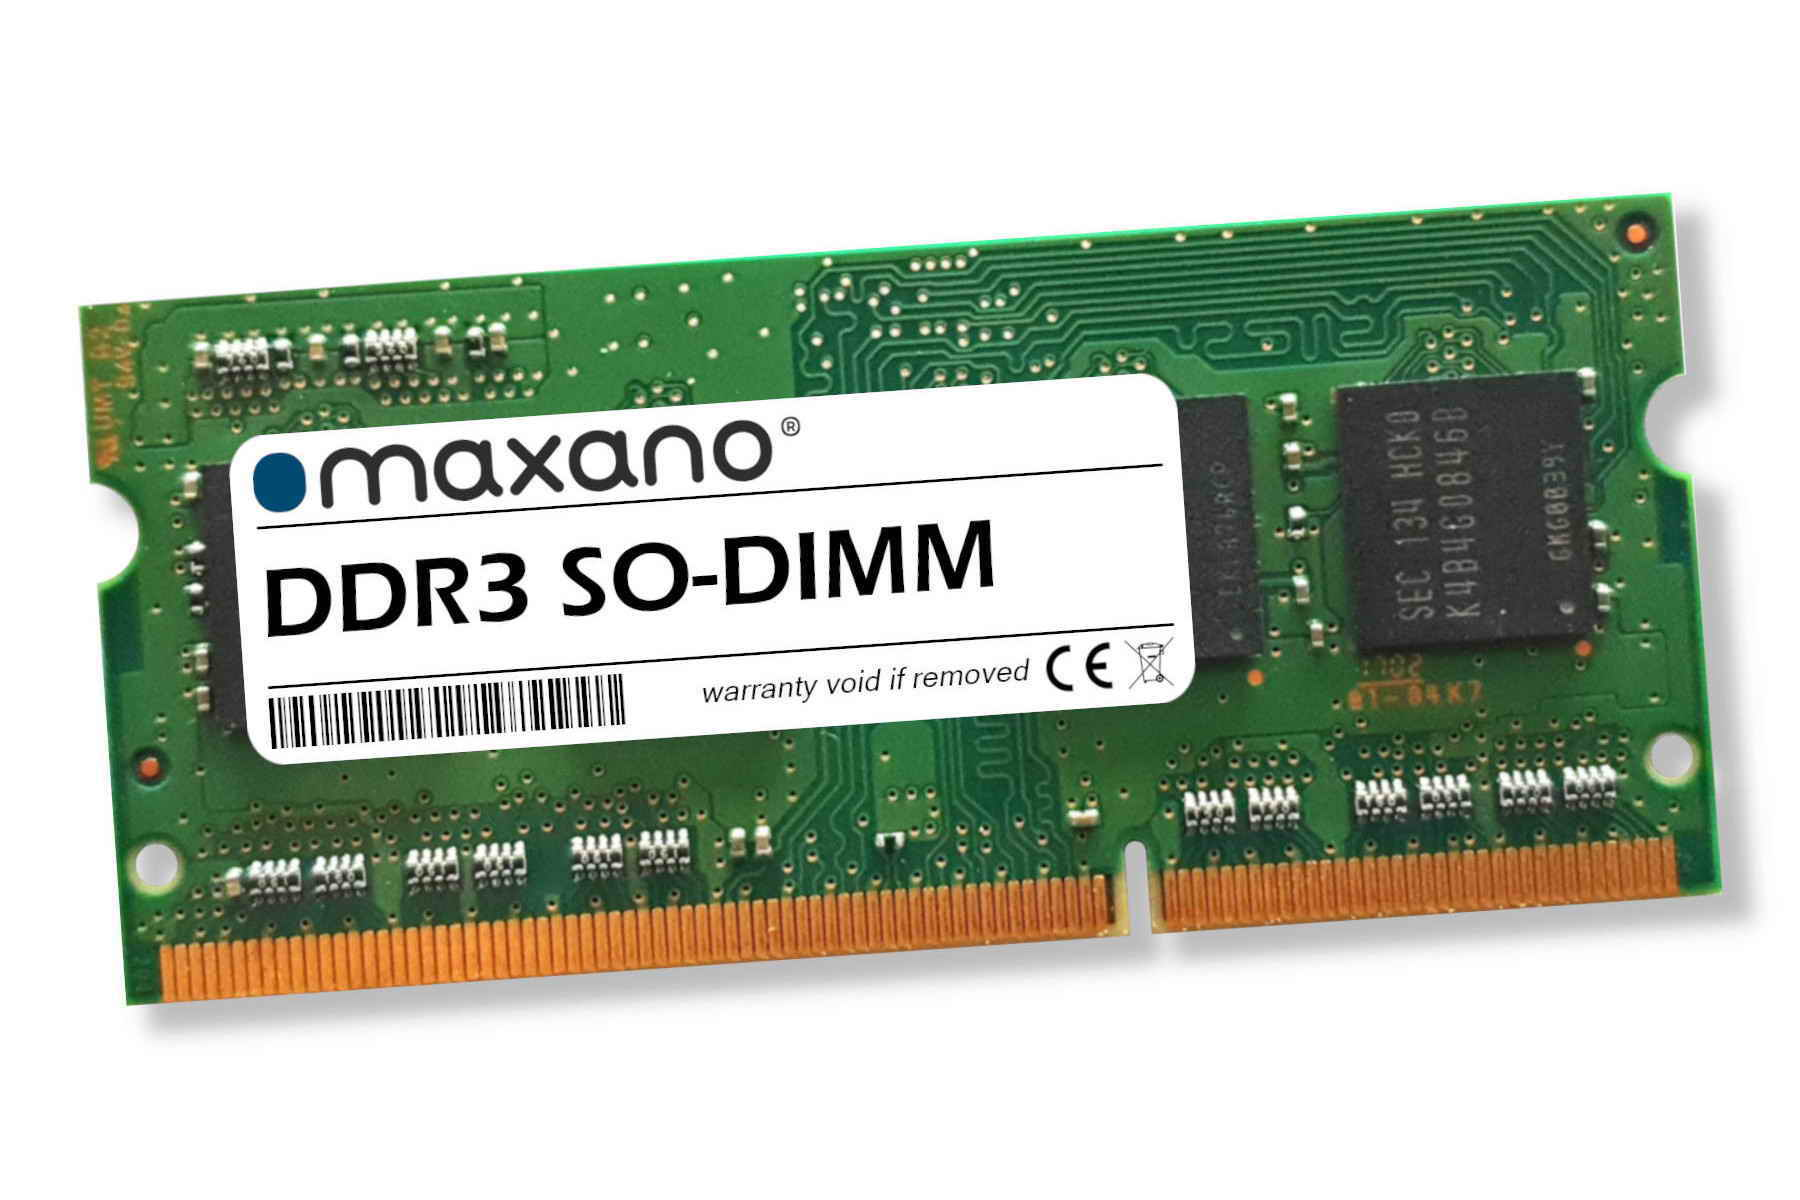 Arbeitsspeicher AS6212RD SDRAM GB (PC3-12800 Asustor MAXANO für 4 SO-DIMM) RAM 4GB